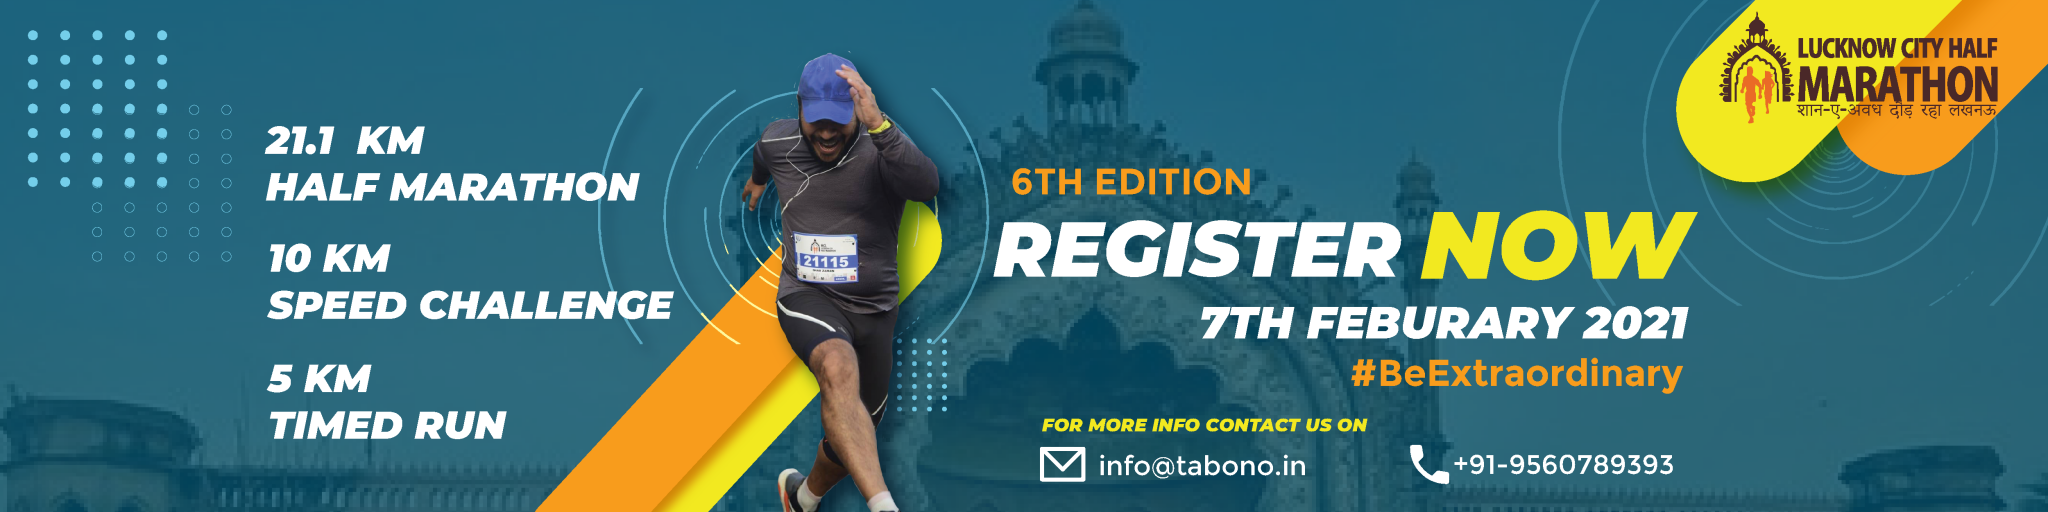 Lucknow City Half Marathon 2021